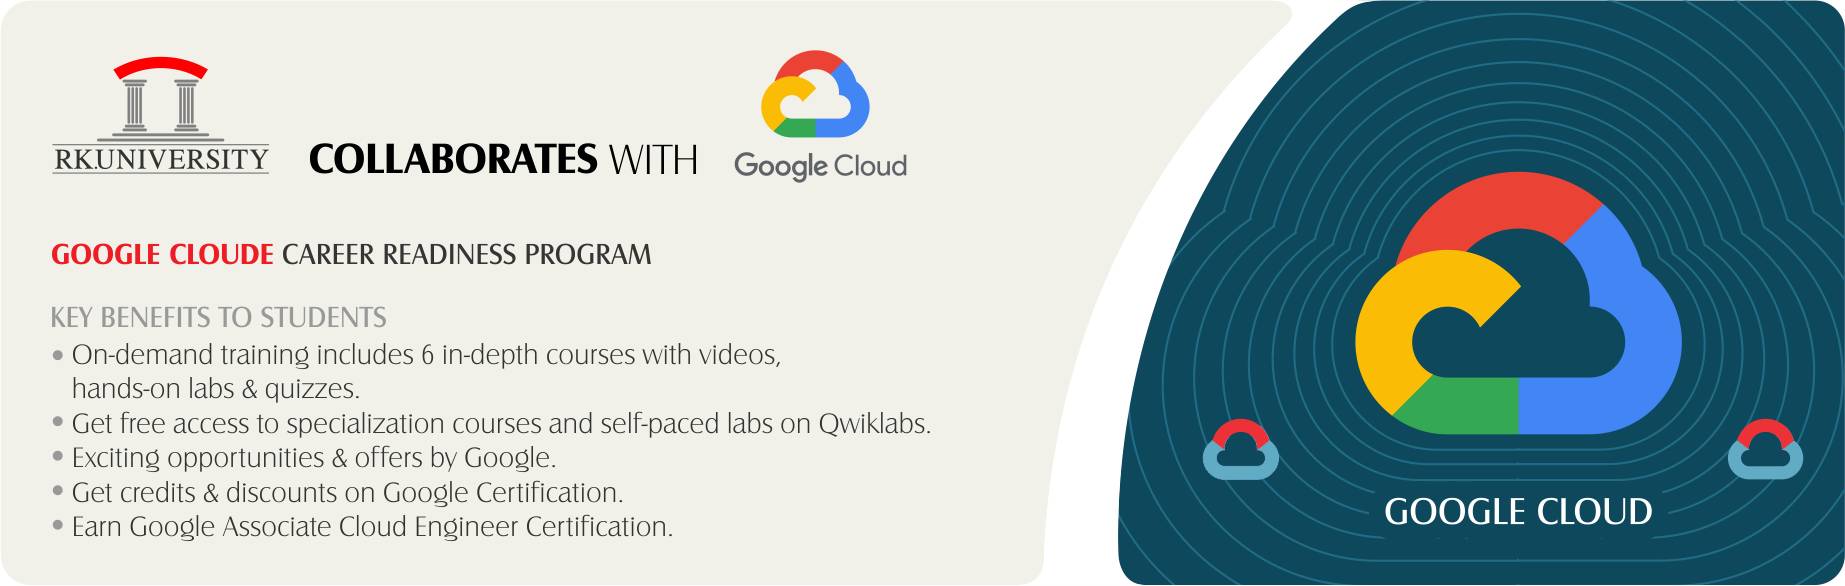 rkuniversity-google-cloud-mou